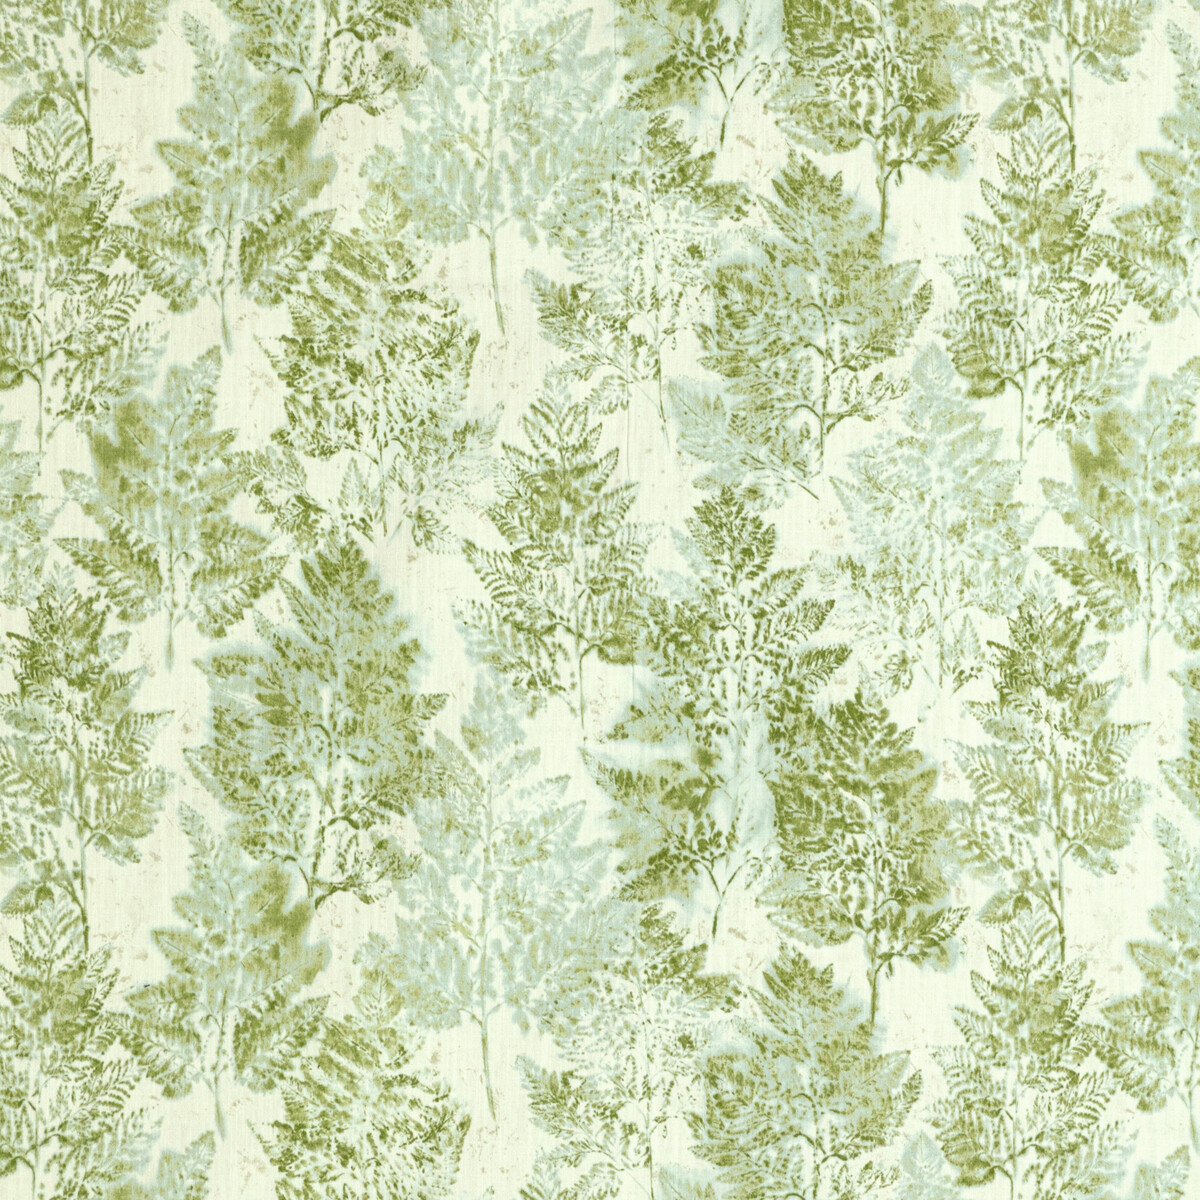 Kravet Basics Heiki Fern.23.0 Heiki Fern Multipurpose Fabric in Linden/White/Green